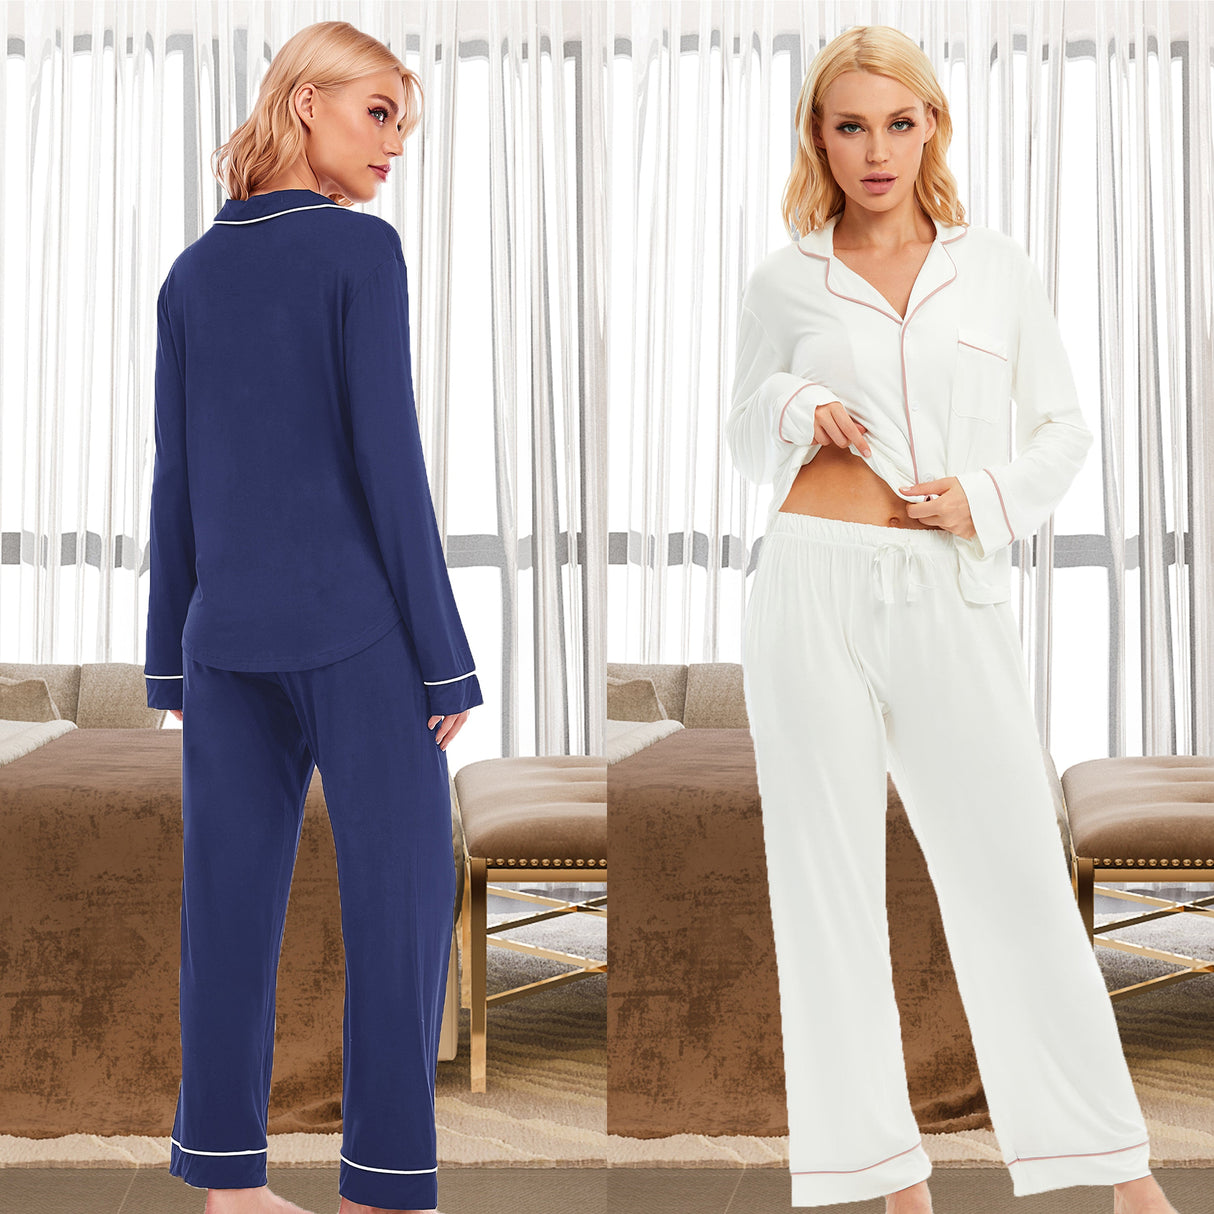 LUBOT Women’s Pajamas Two-piece PJ Set Modal Lounge Set Long Sleeve